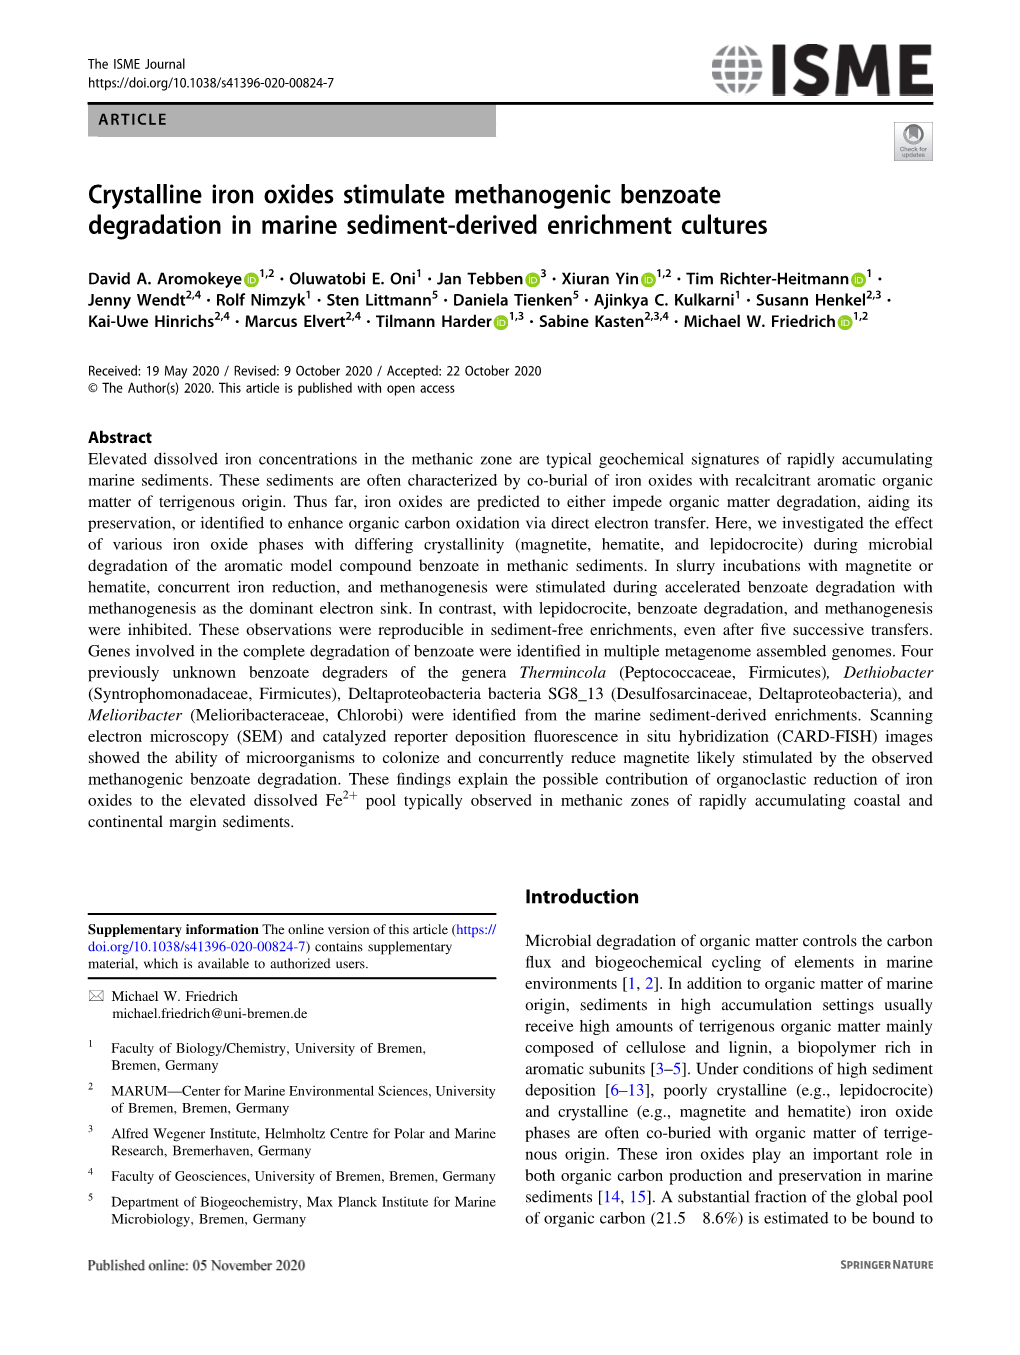 Crystalline Iron Oxides Stimulate Methanogenic Benzoate Degradation in Marine Sediment-Derived Enrichment Cultures